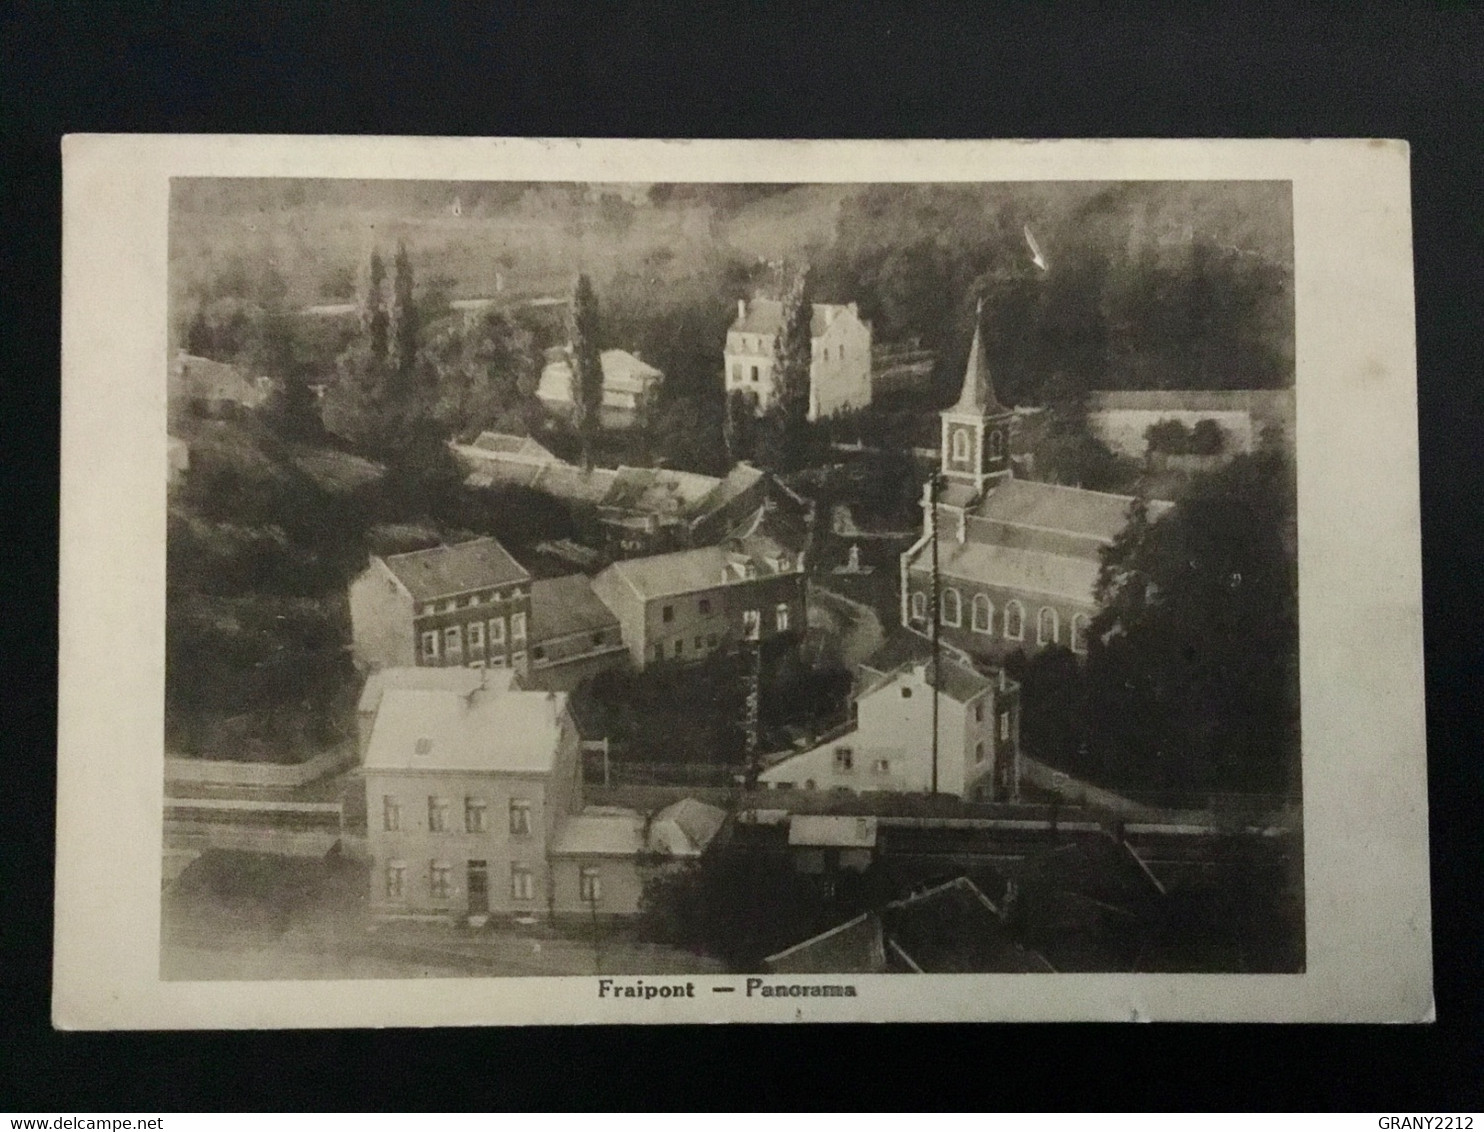 FRAIPONT « PANORAMA 1908 » GARE DE FRAIPONT,ÉGLISE. - Trooz